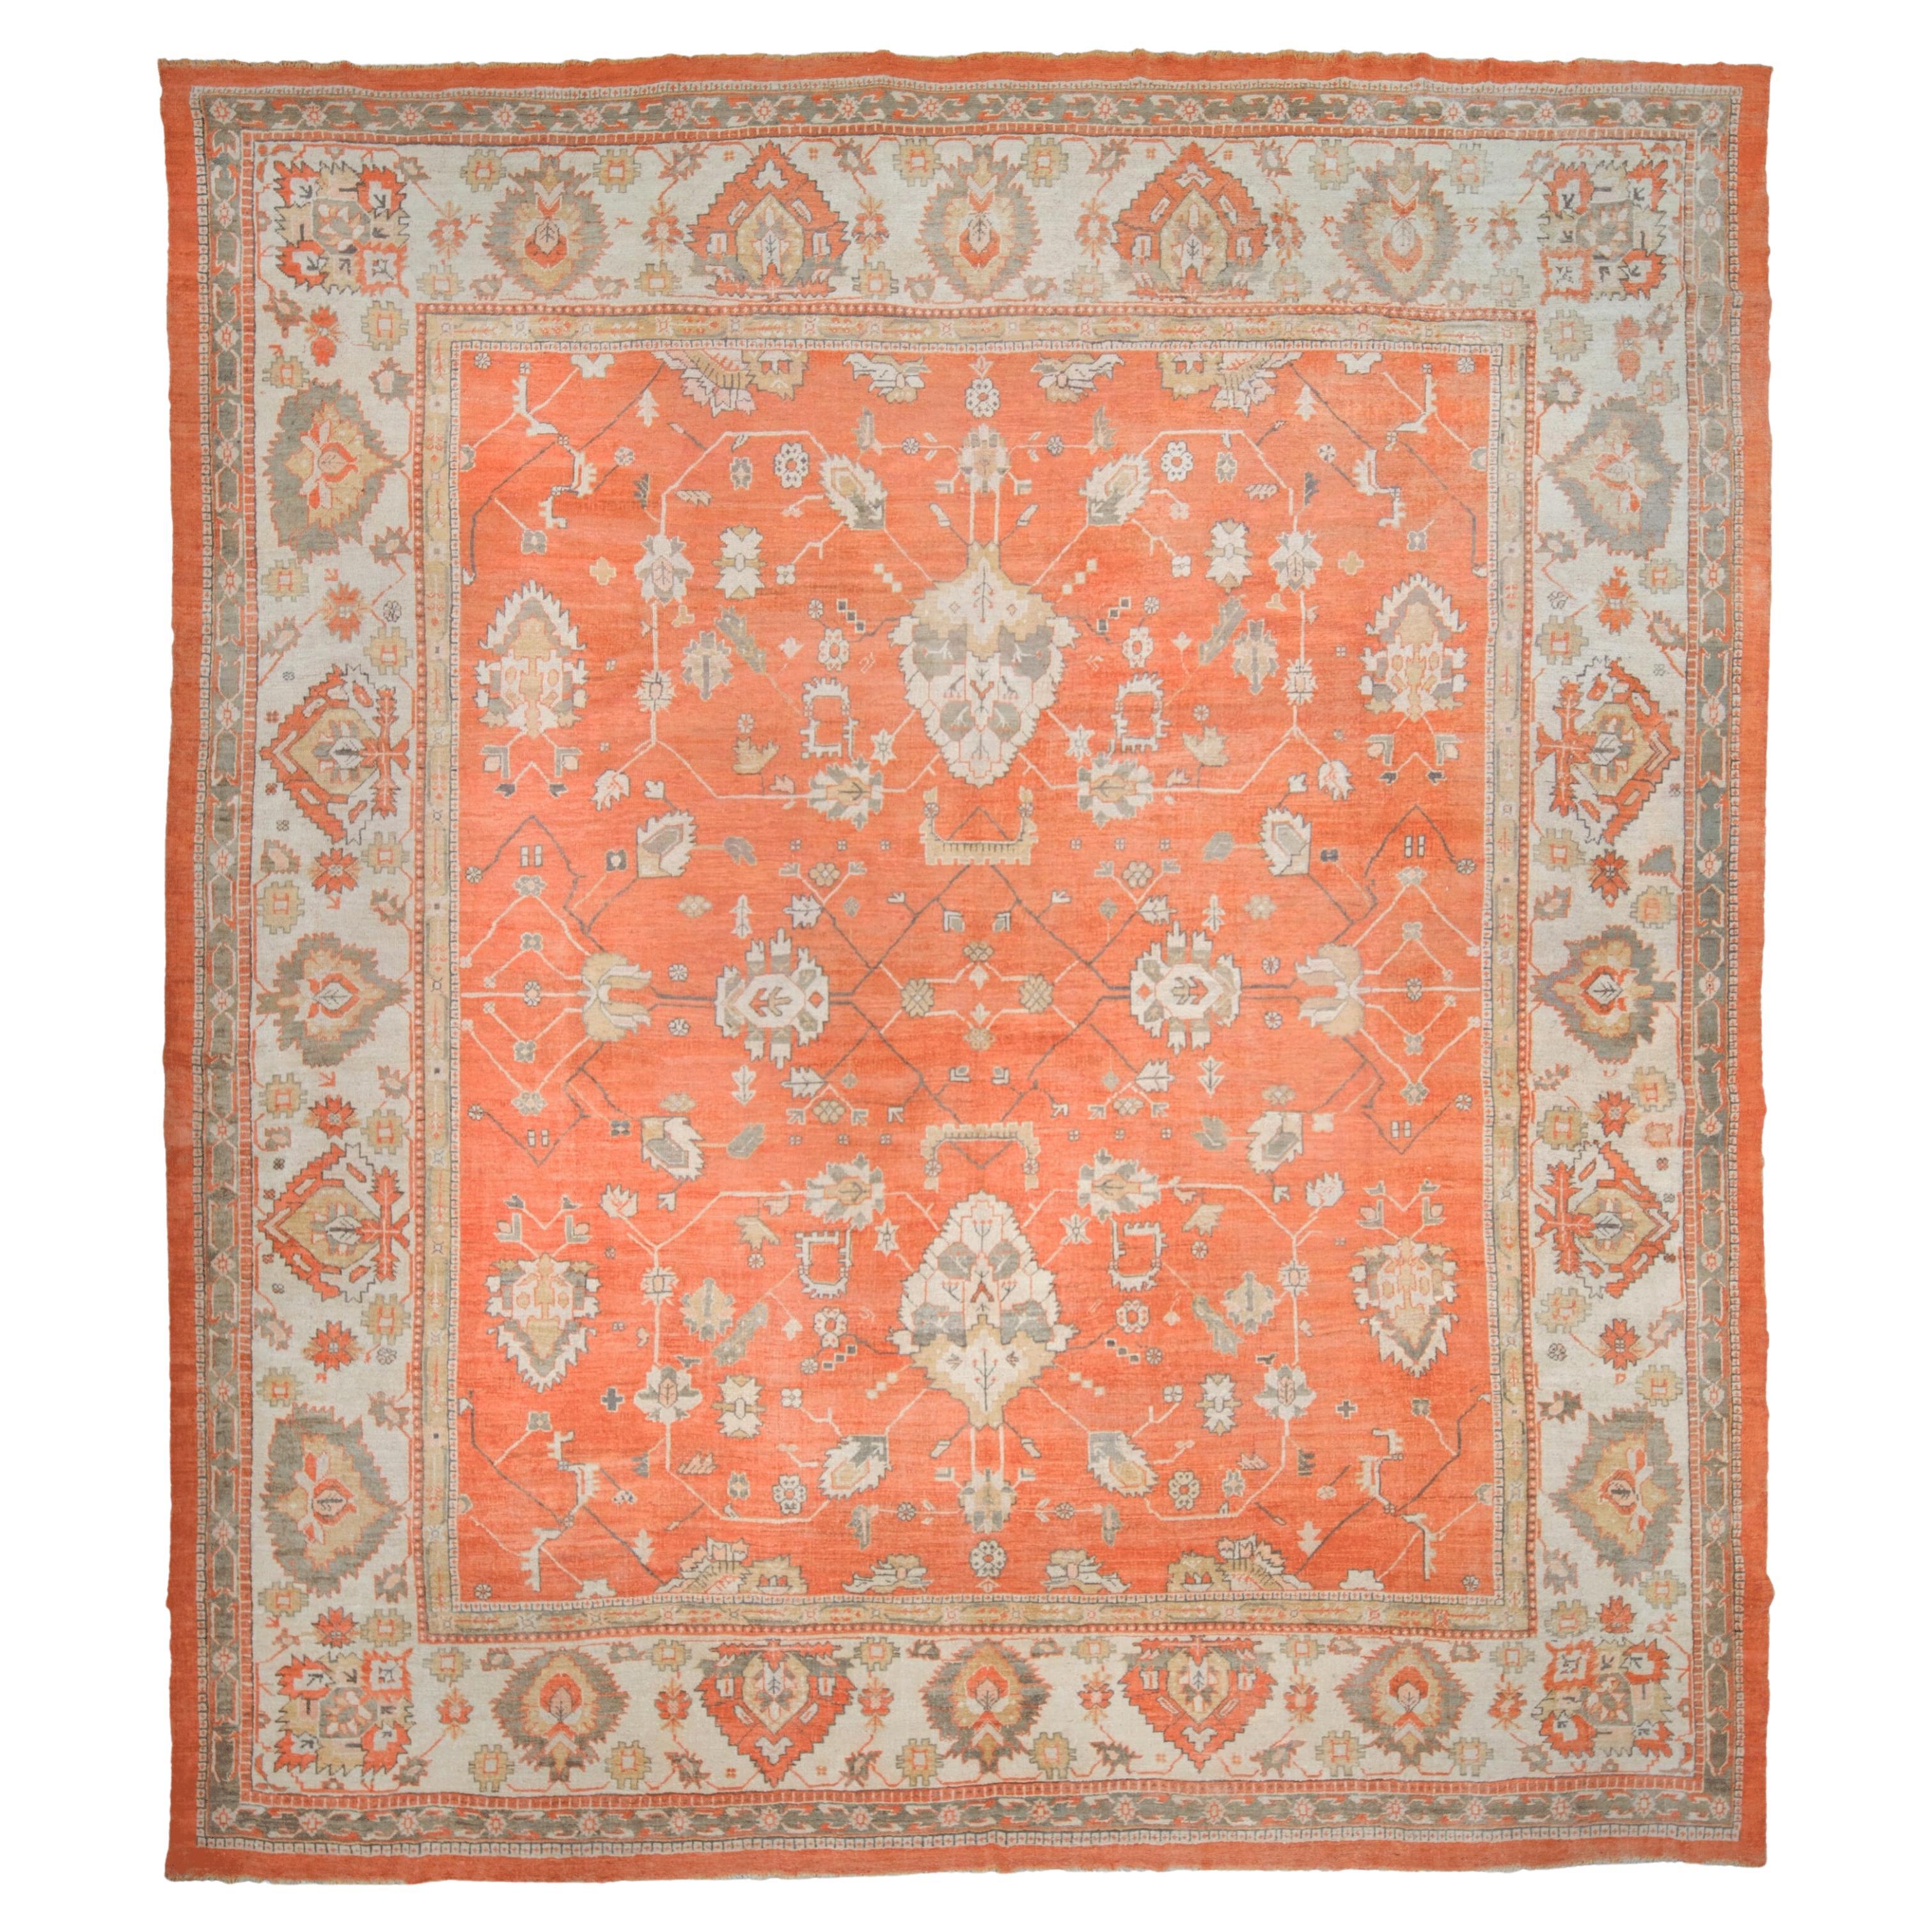 Late of 19th Century Ushak Carpet - Antique Anatolian Carpet For Sale